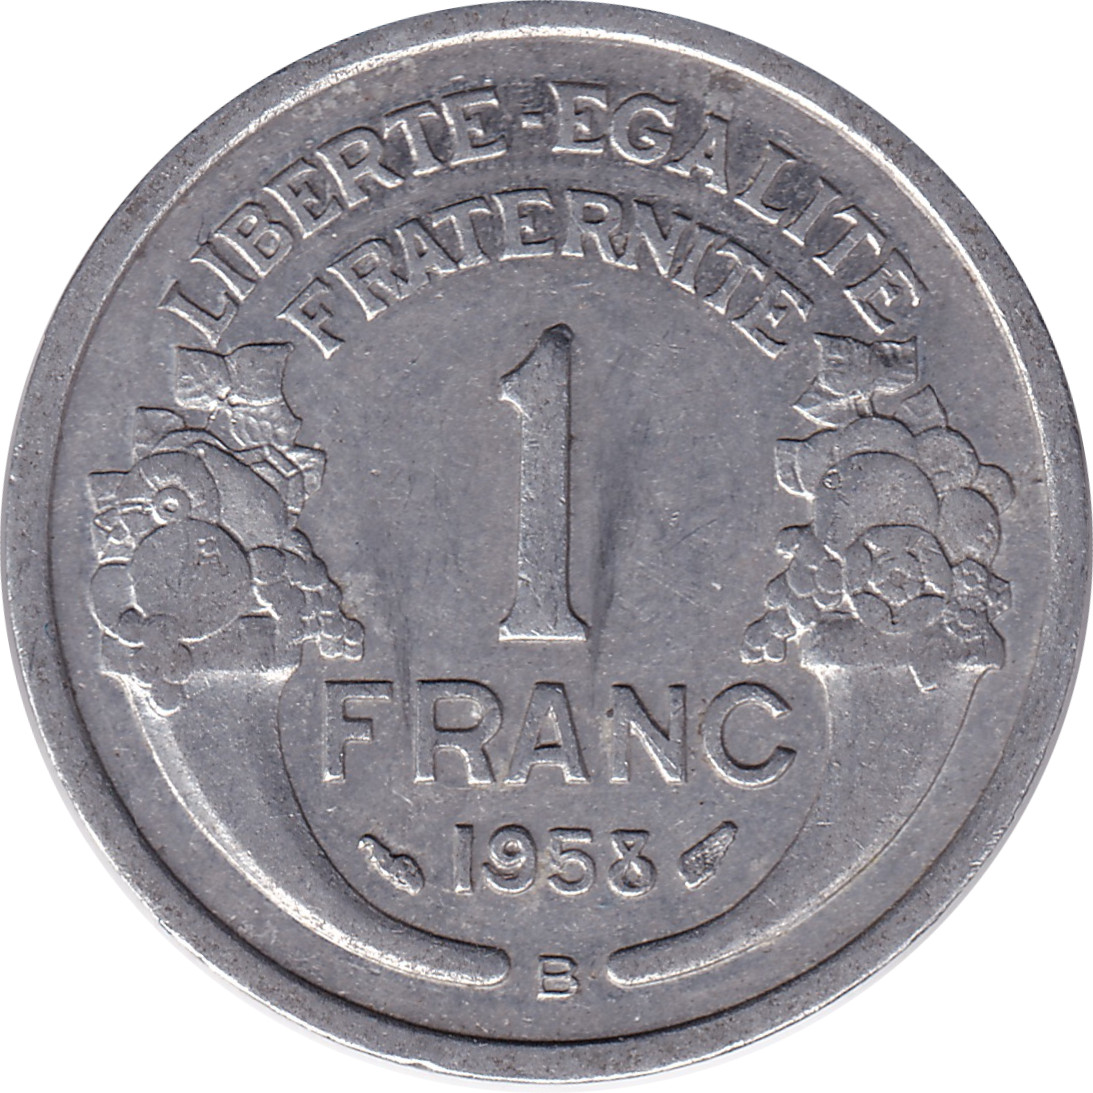 1 franc - Morlon